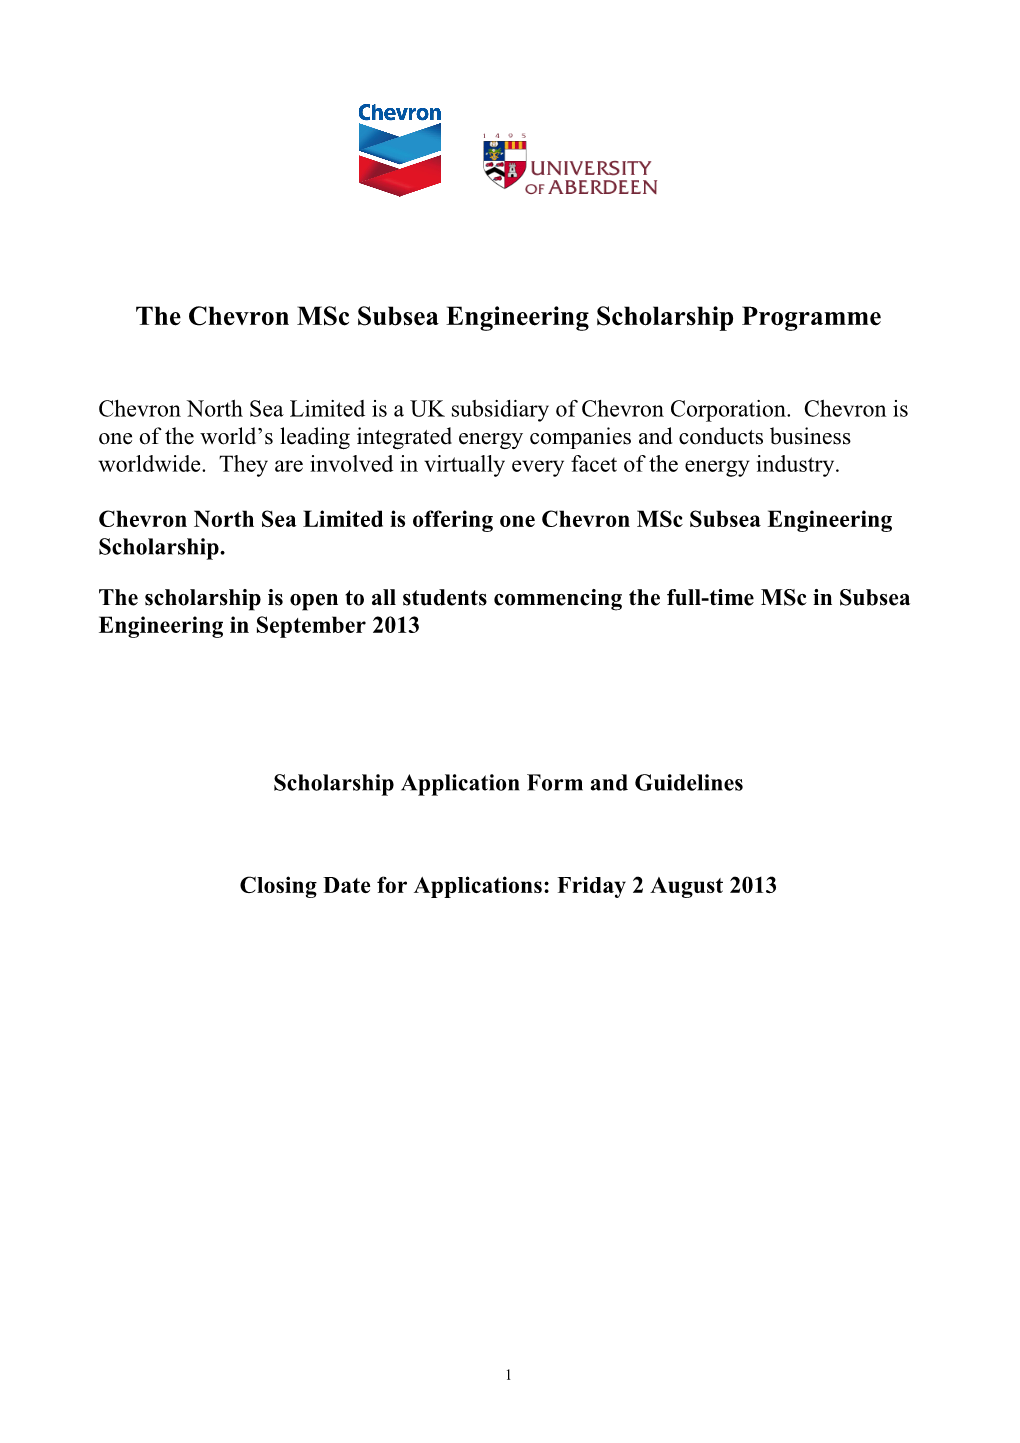 The Chevron Msc Subseaengineering Scholarship Programme